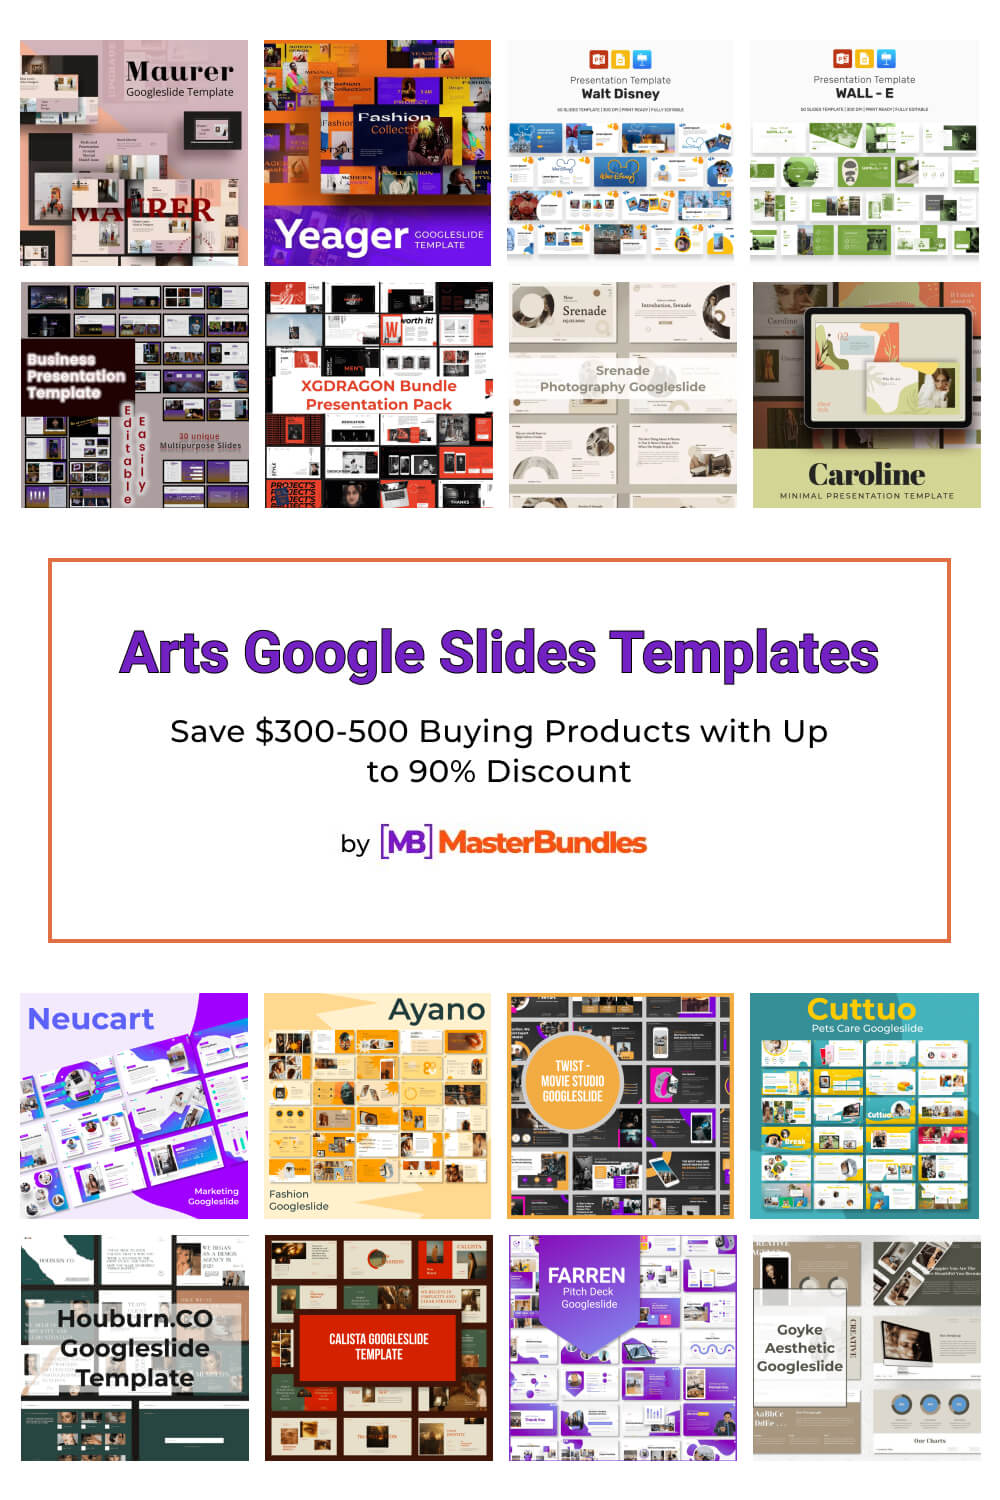 arts google slides templates pinterest image.